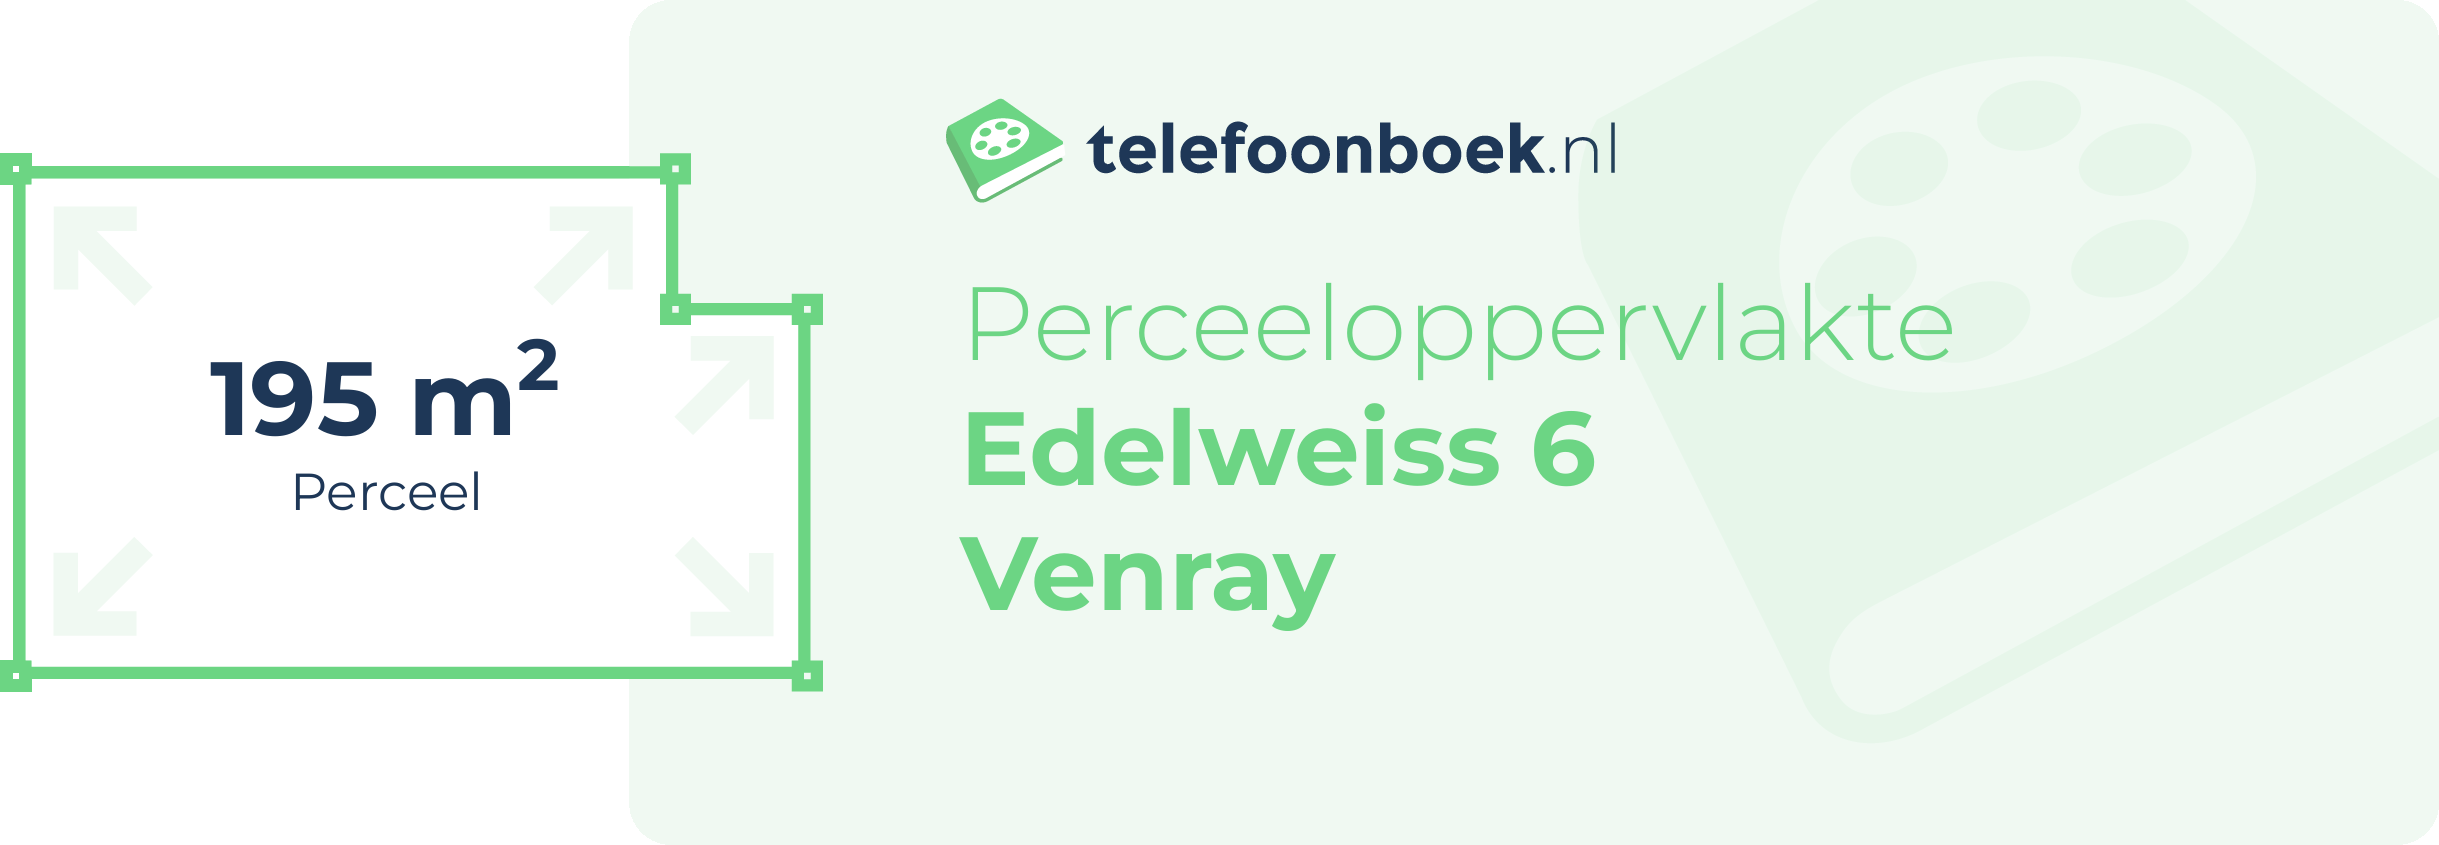 Perceeloppervlakte Edelweiss 6 Venray